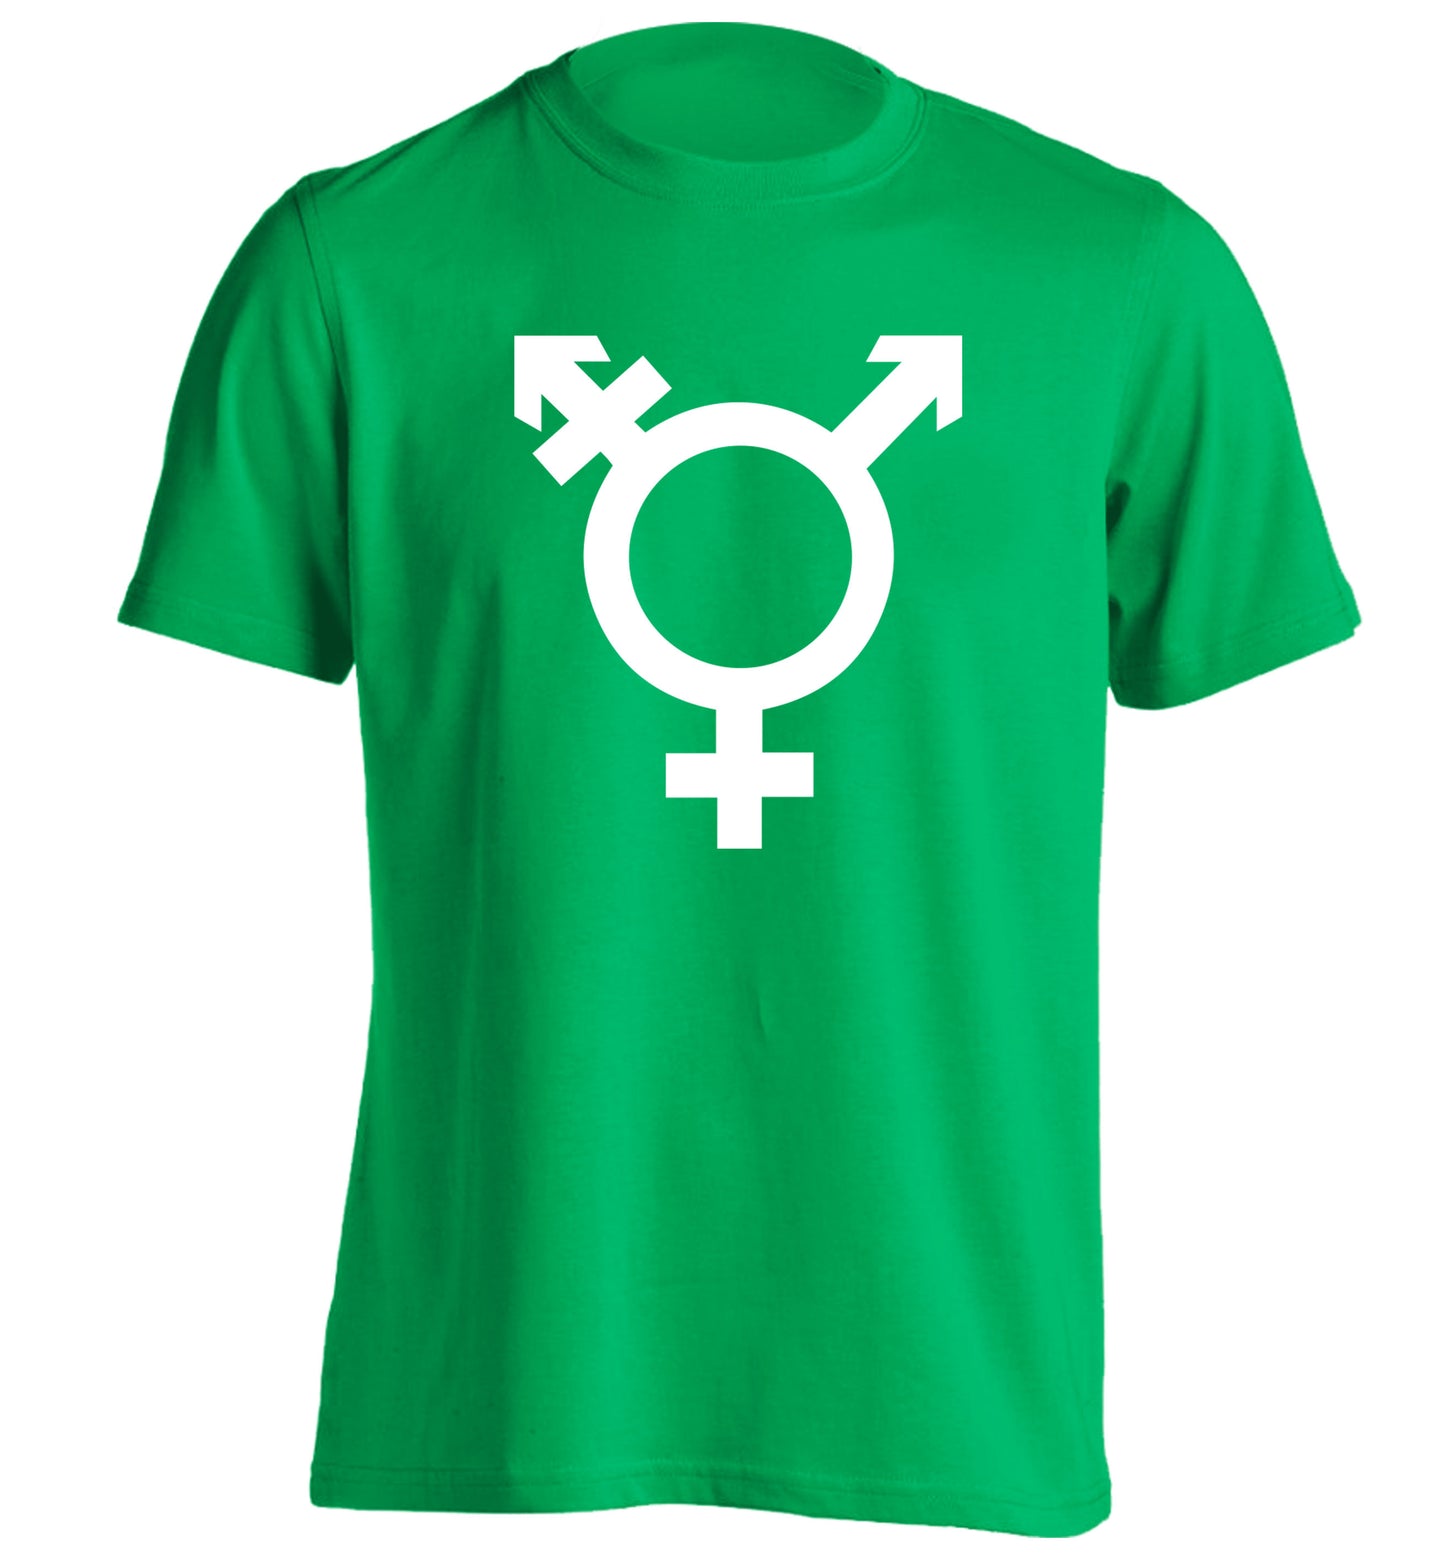 Gender neutral symbol large adults unisex green Tshirt 2XL